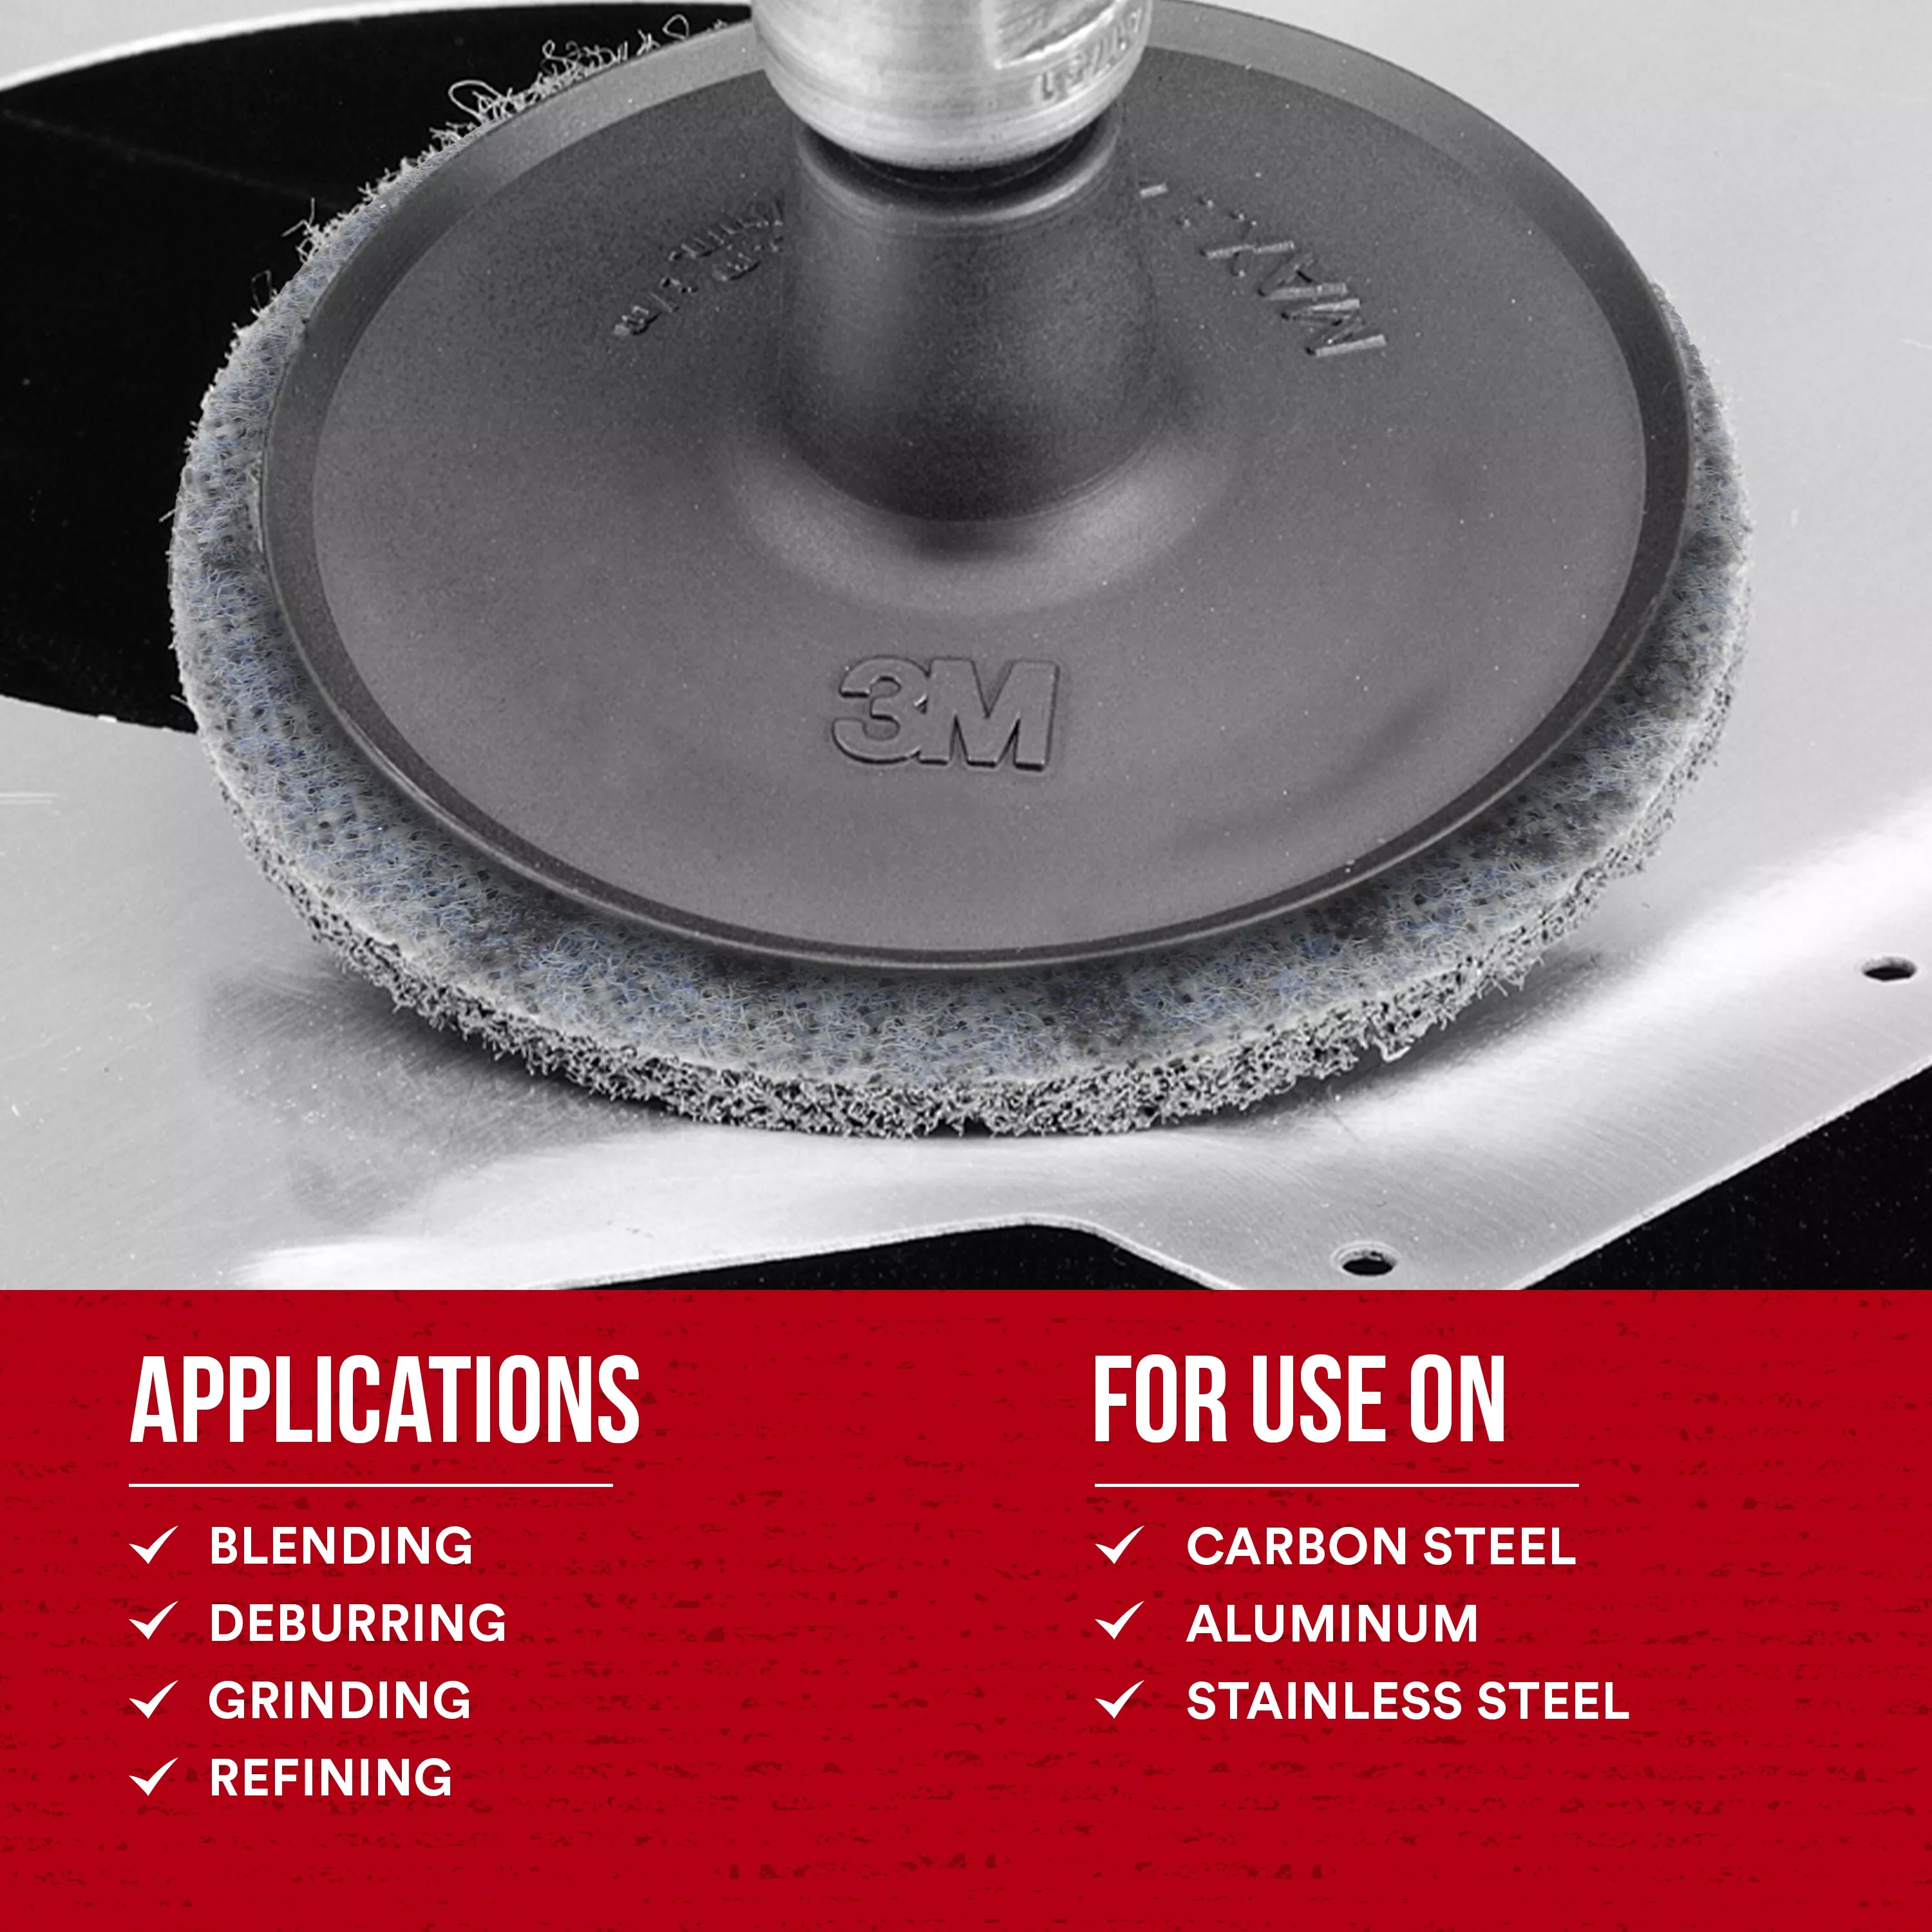 SKU 7010309547 | Scotch-Brite™ Roloc™ SE Surface Conditioning Disc